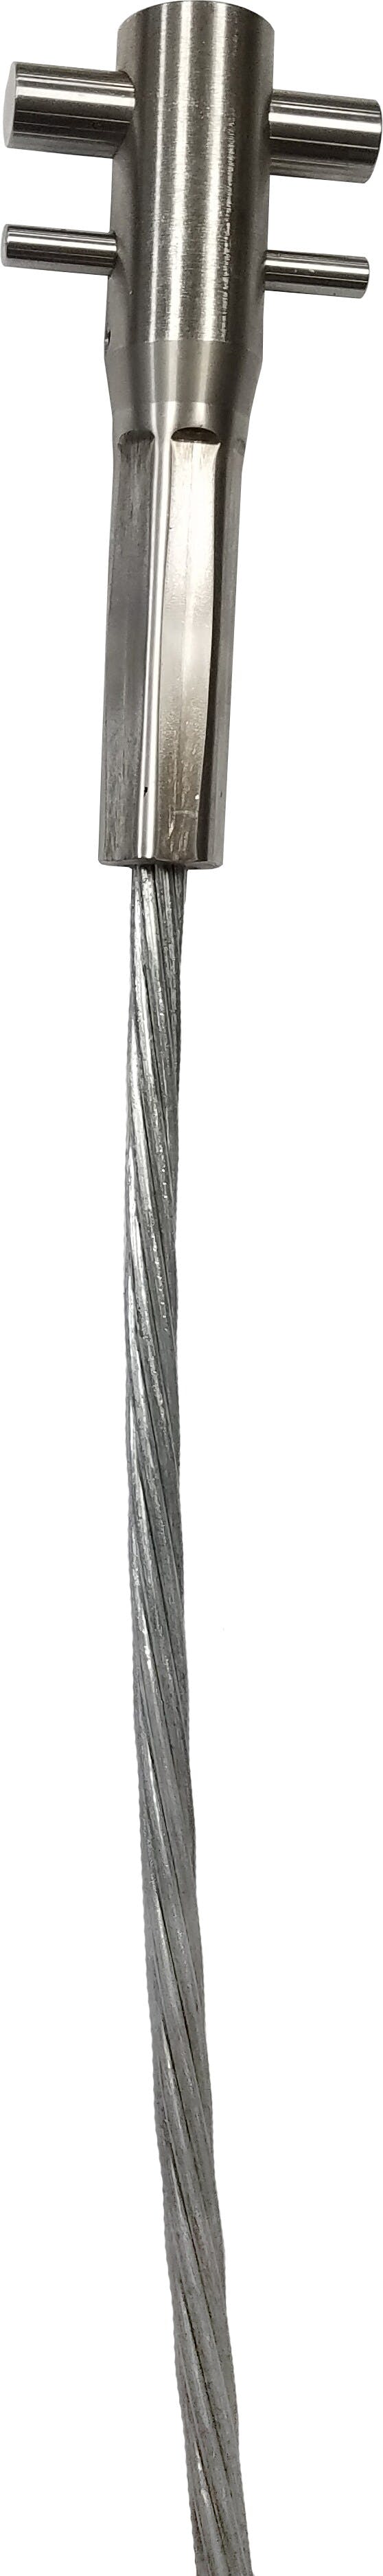 3M™ DBI-SALA® Lad-Saf™ Swaged Cable 6115026, 3/8 Inch, Galvanized Steel, 100 m_0